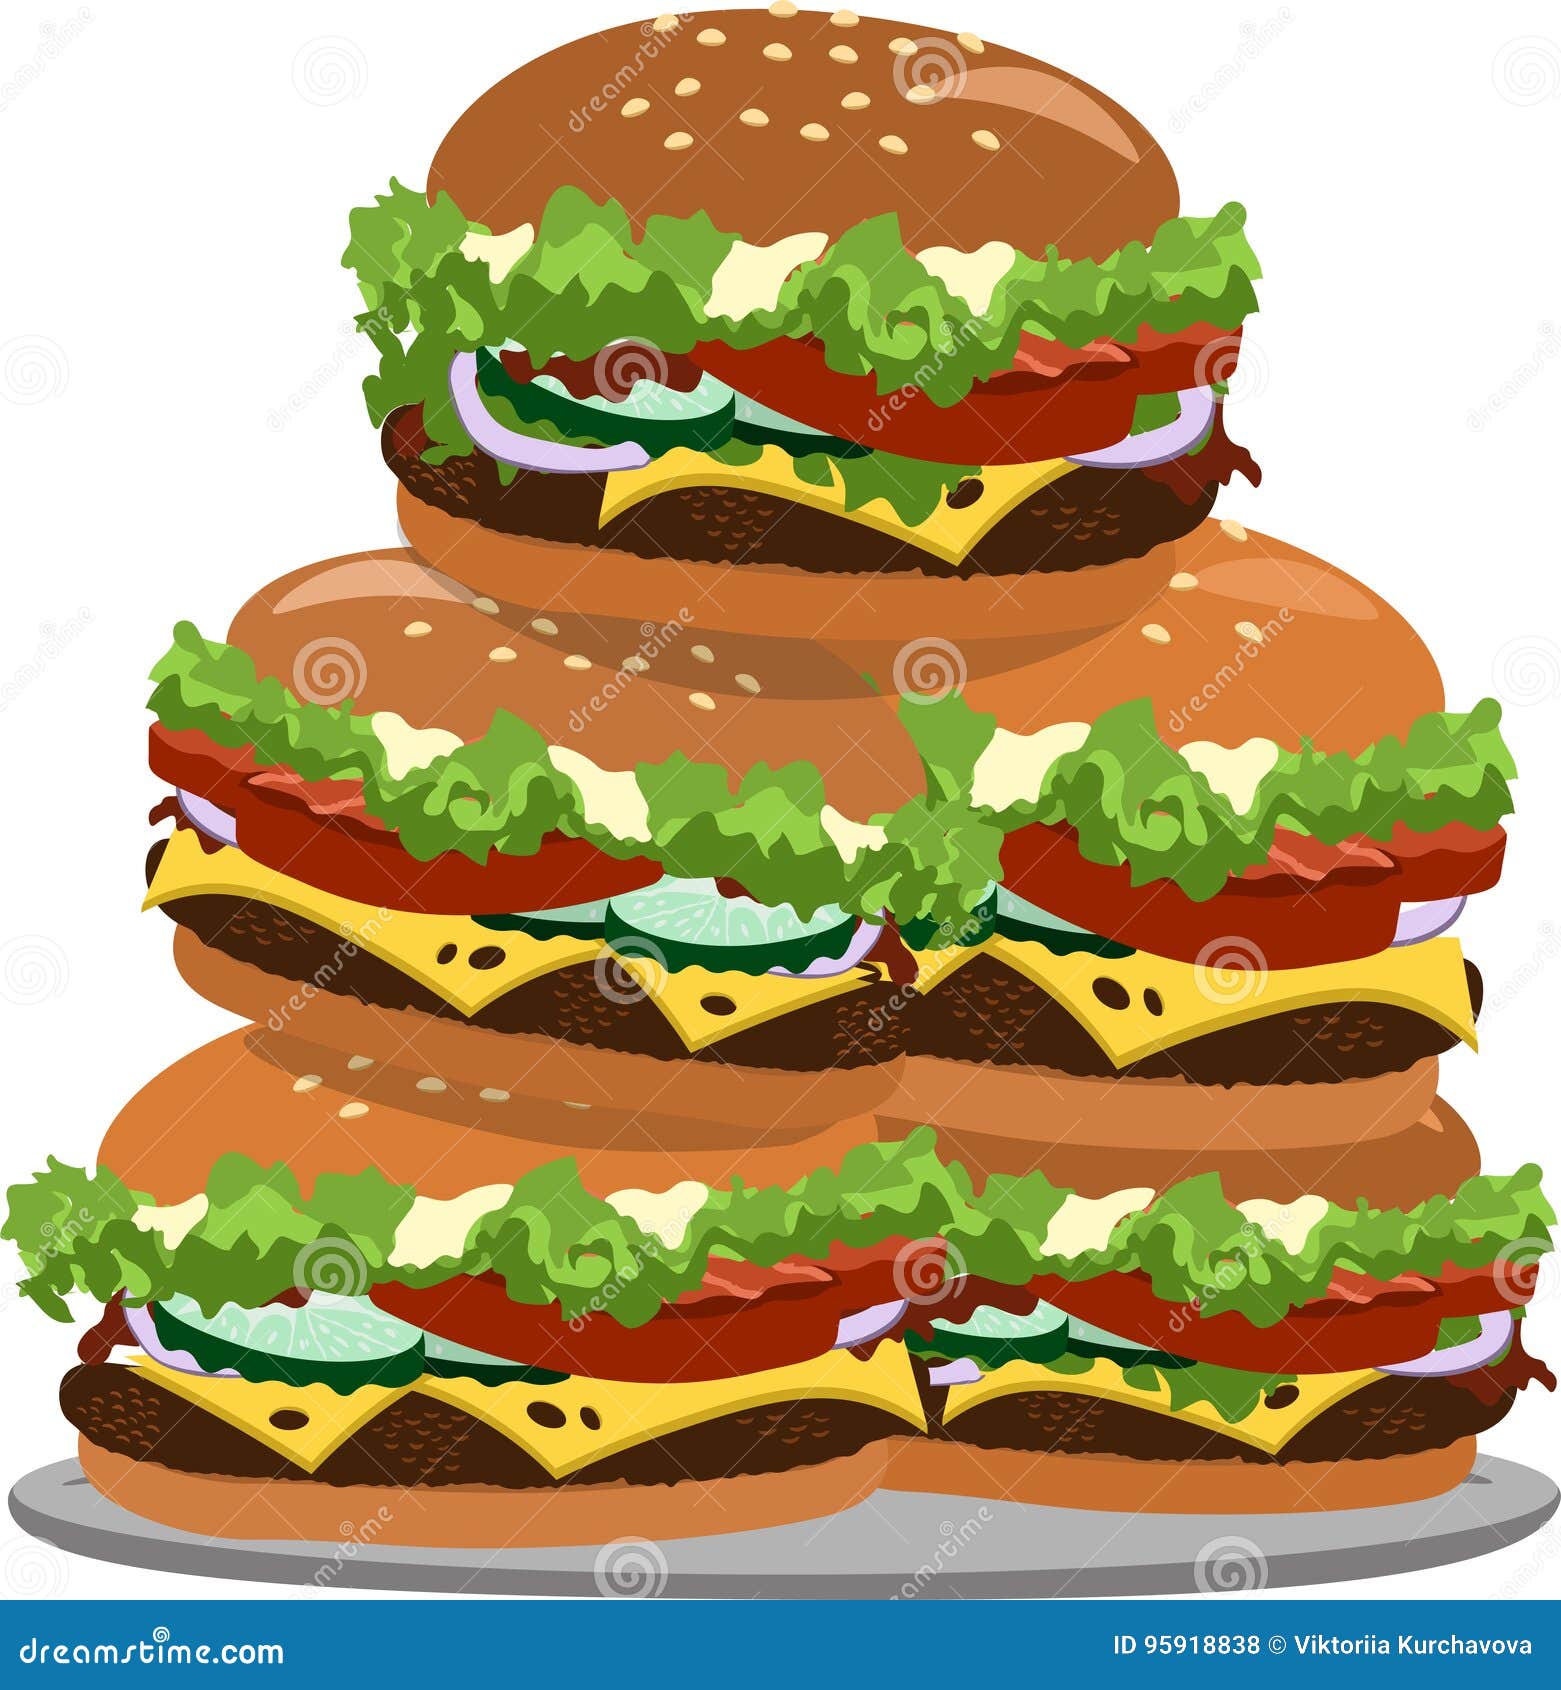 A Lot of Hamburgers on a Plate, Illustration Stock Illustration